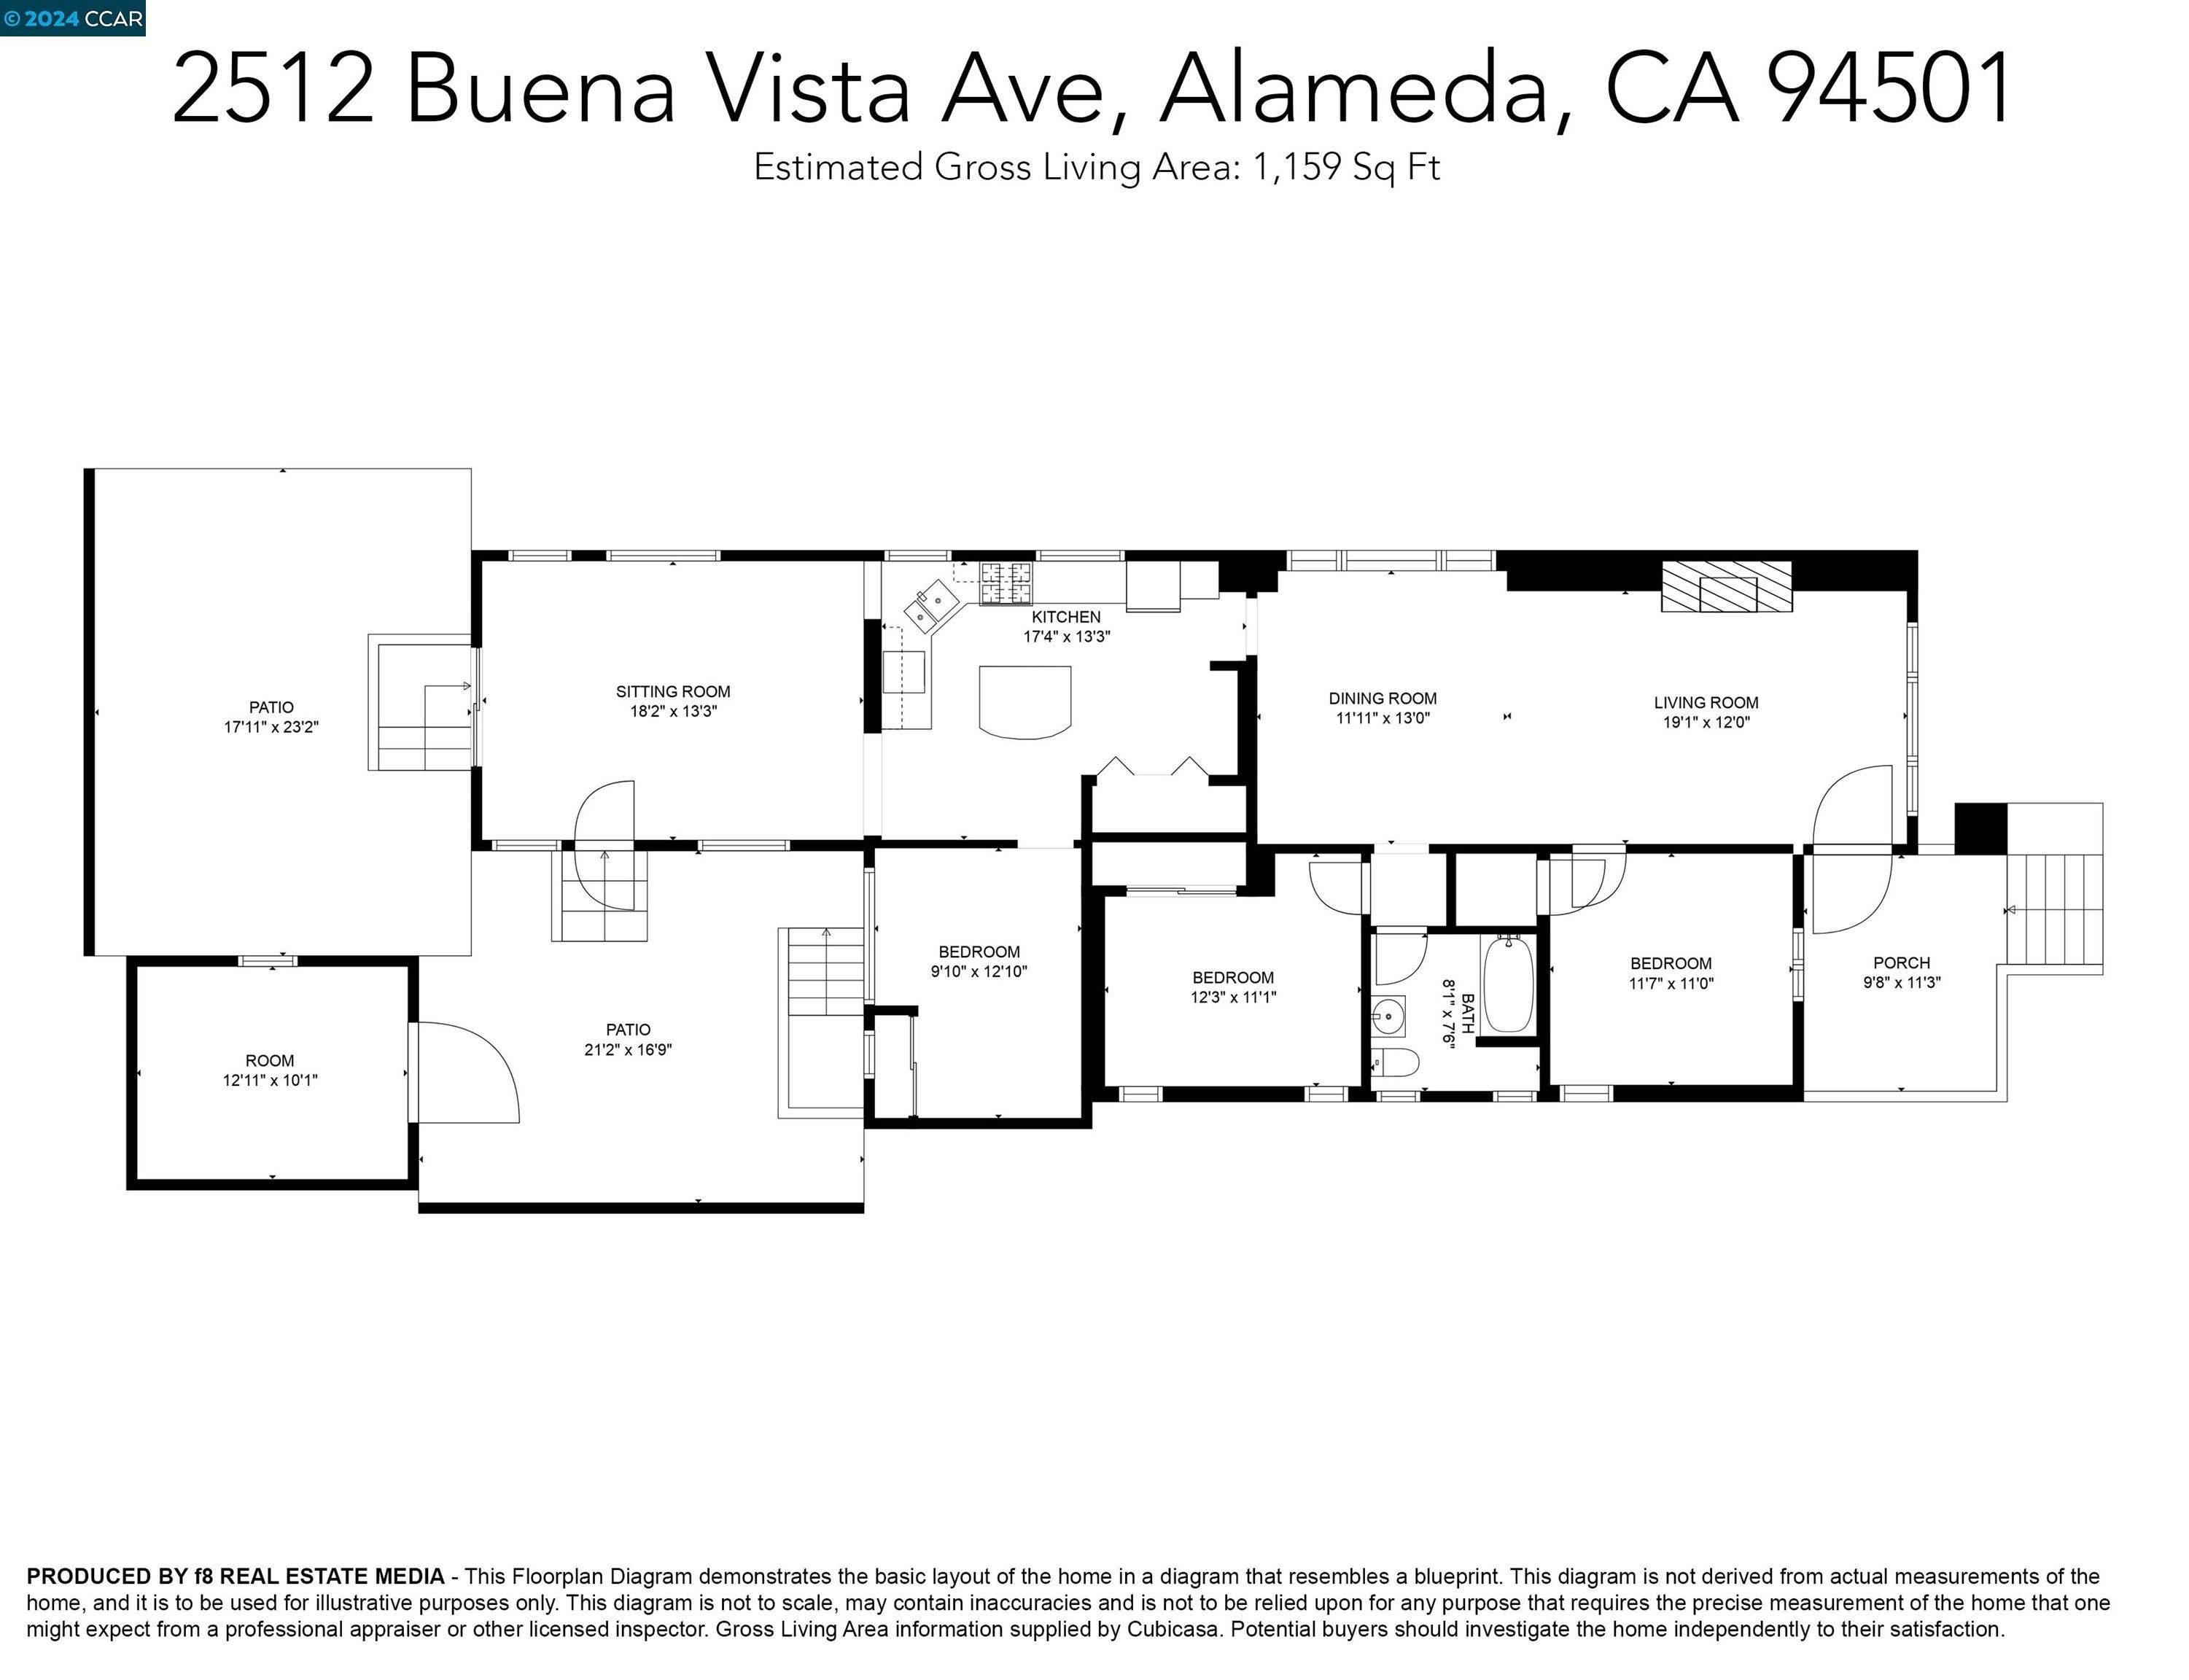 39. 2512 Buena Vista Ave